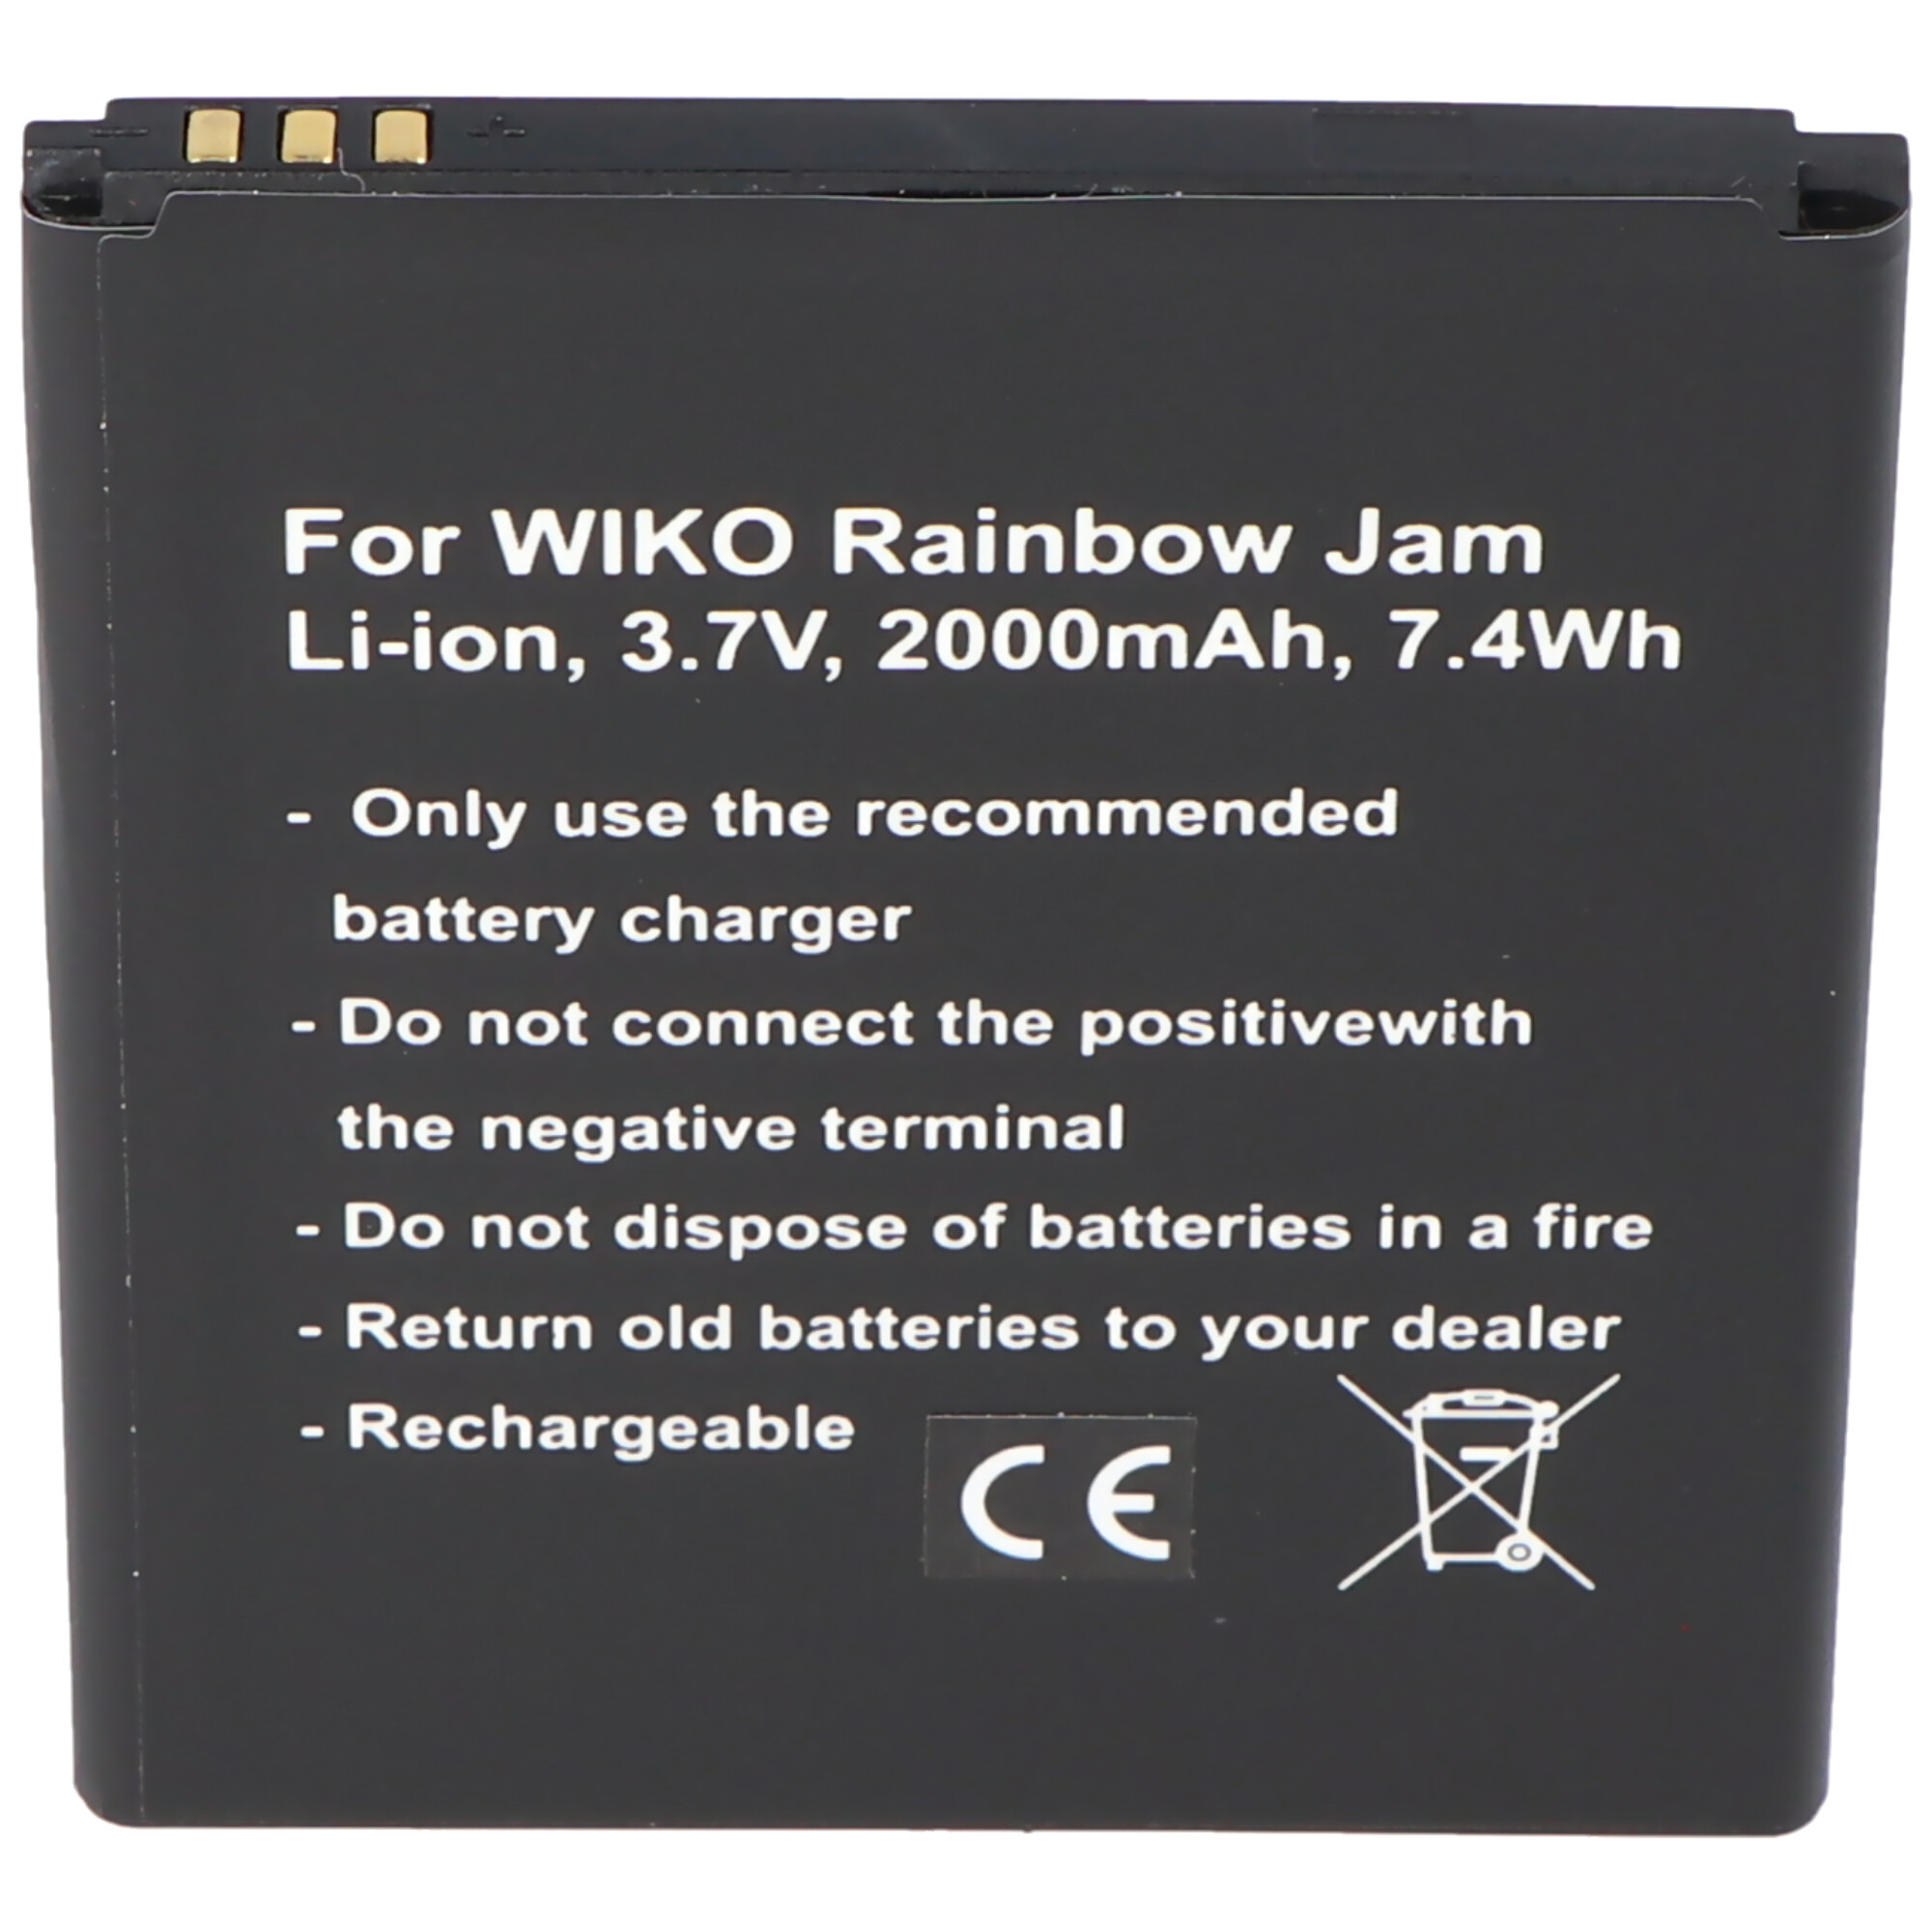 Lithium-Ionen 4,7mm Jam Rainbow x Rainbow Li-Ion Wiko 2000 Jam, 60,2 Wiko passend 5222, Handy-Akku, 4G, Akku x mAh für - ACCUCELL 70,0 Akku